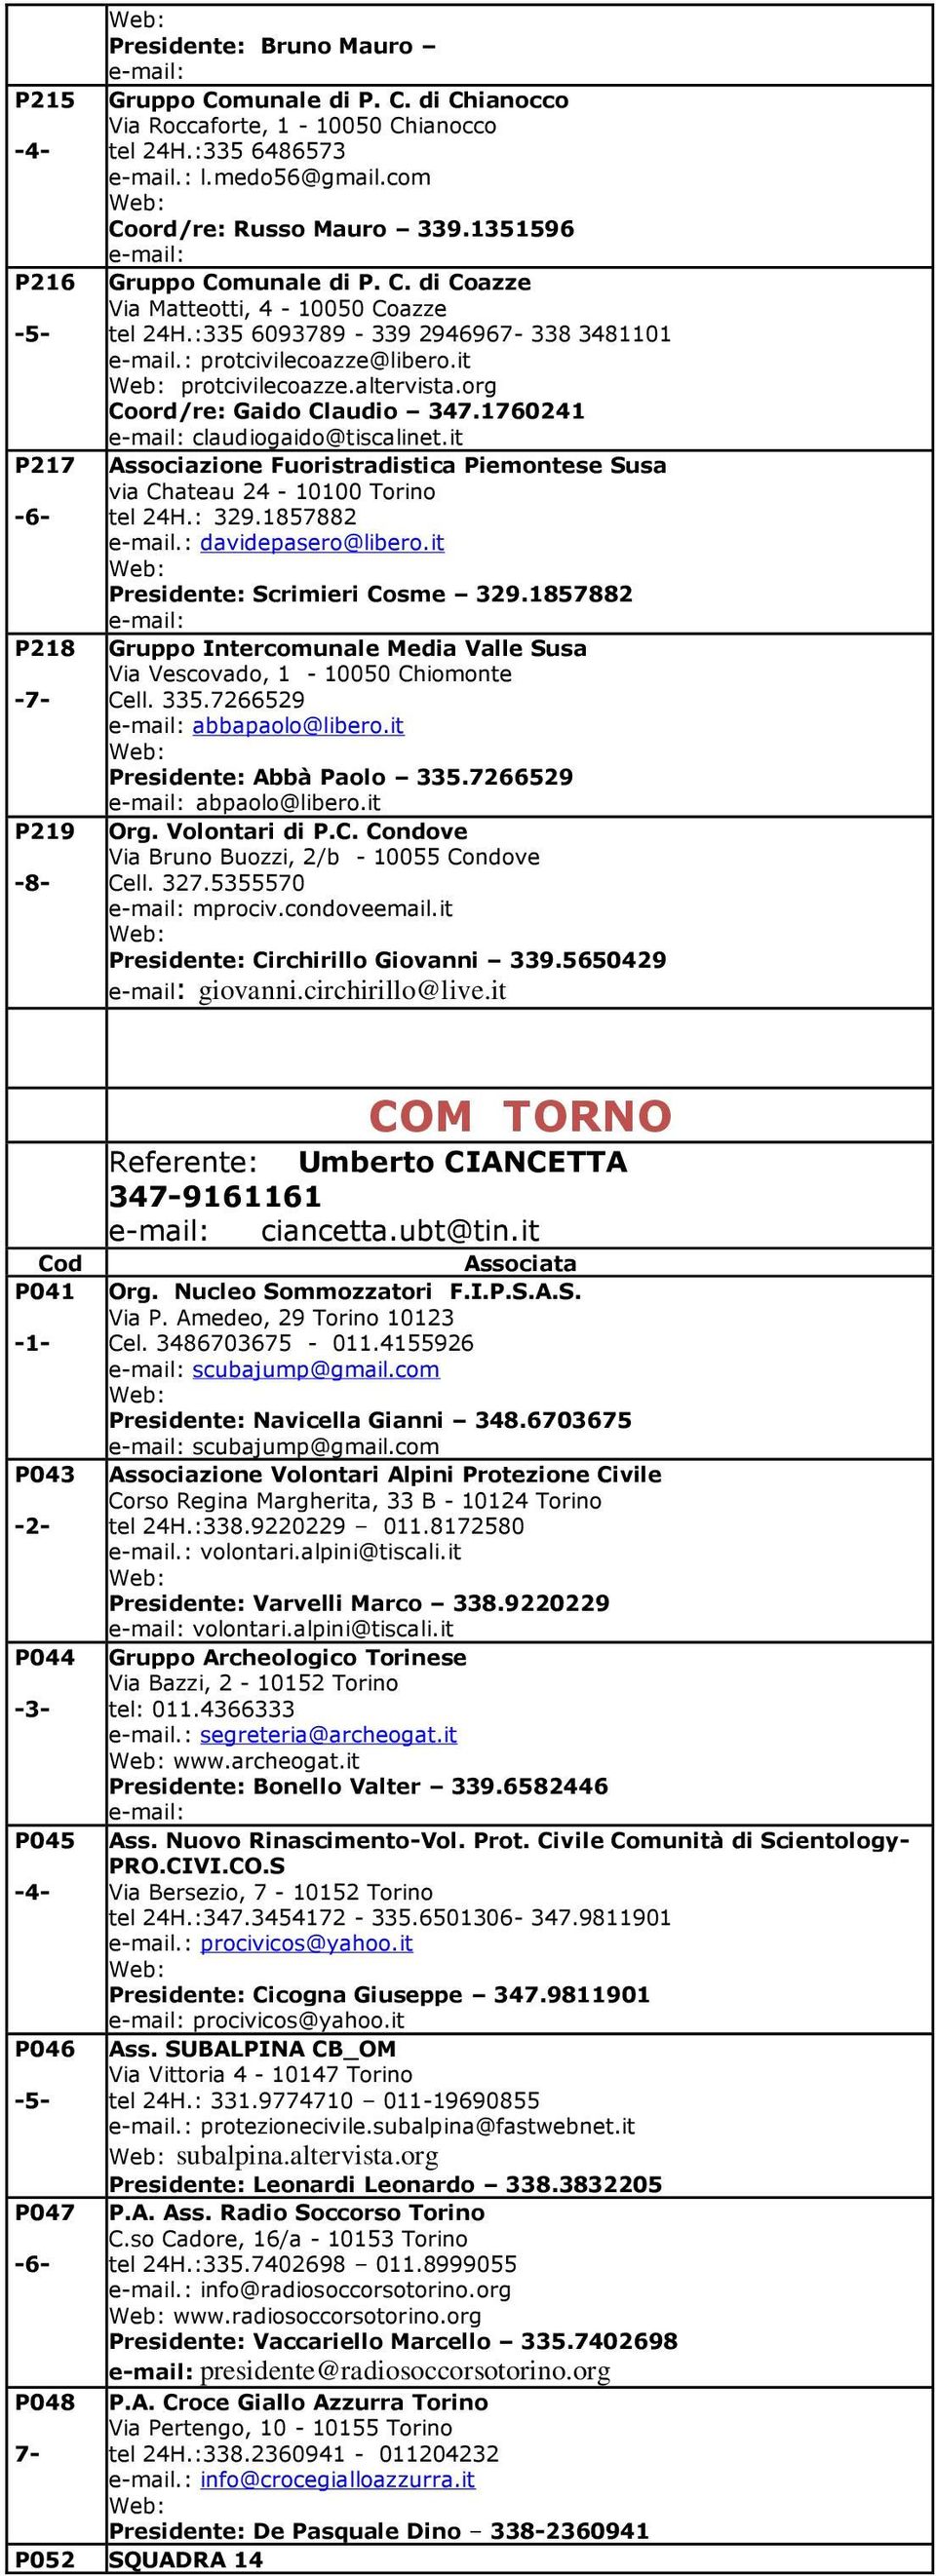 org Coord/re: Gaido Claudio 347.1760241 claudiogaido@tiscalinet.it Associazione Fuoristradistica Piemontese Susa via Chateau 24-10100 Torino tel 24H.: 329.1857882 e-mail.: davidepasero@libero.